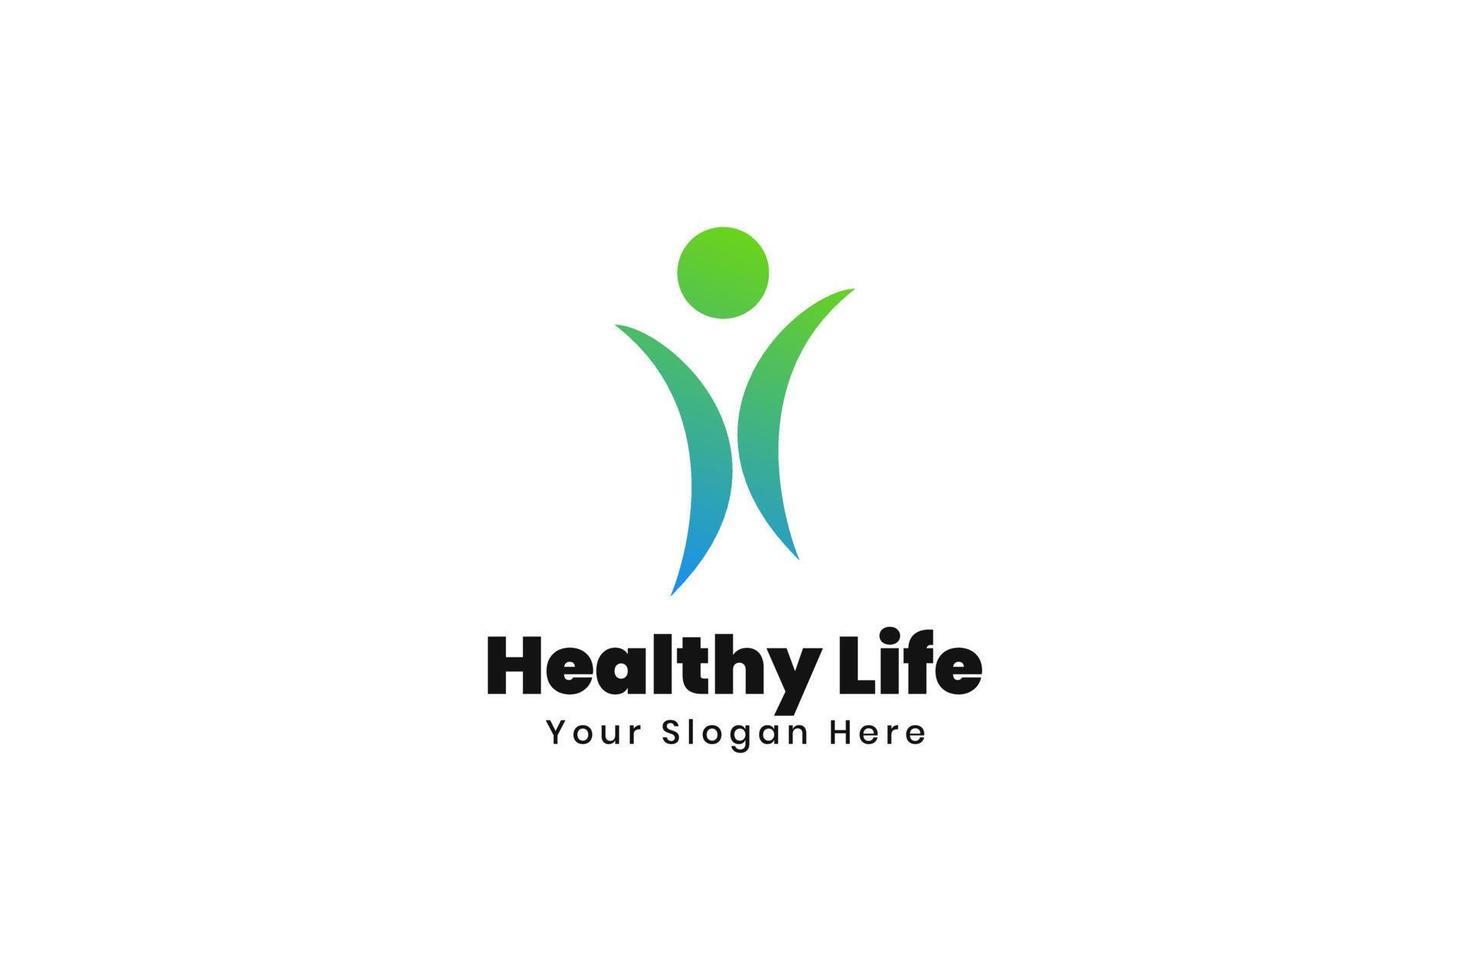 vettore di progettazione di logo di persone di vita sana